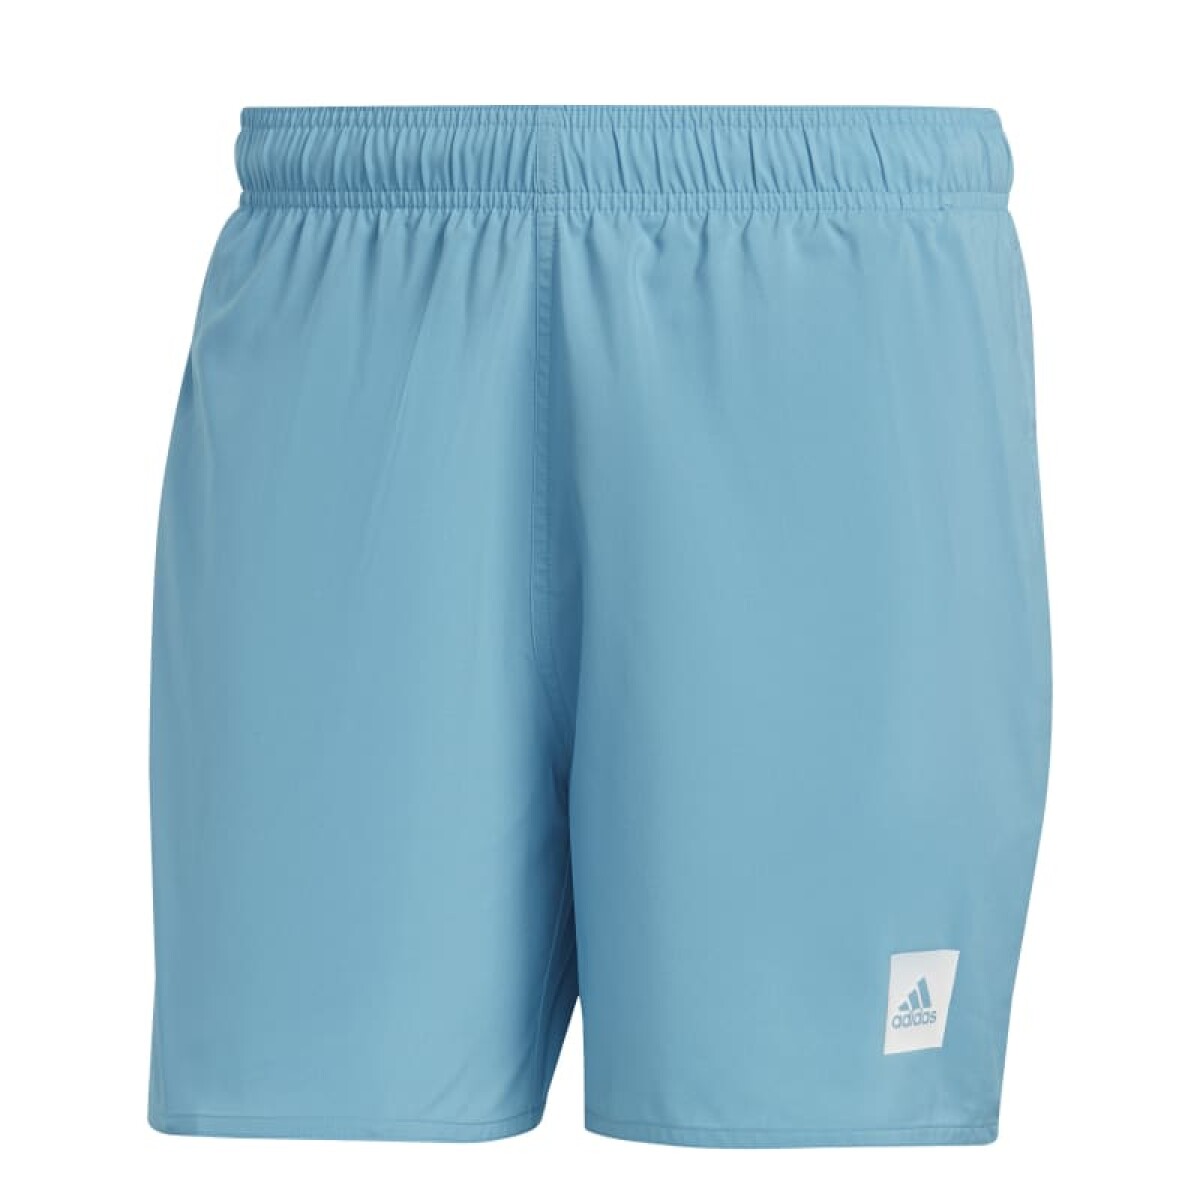 Shorts Adidas De Natación cortos - Preloved Blue 